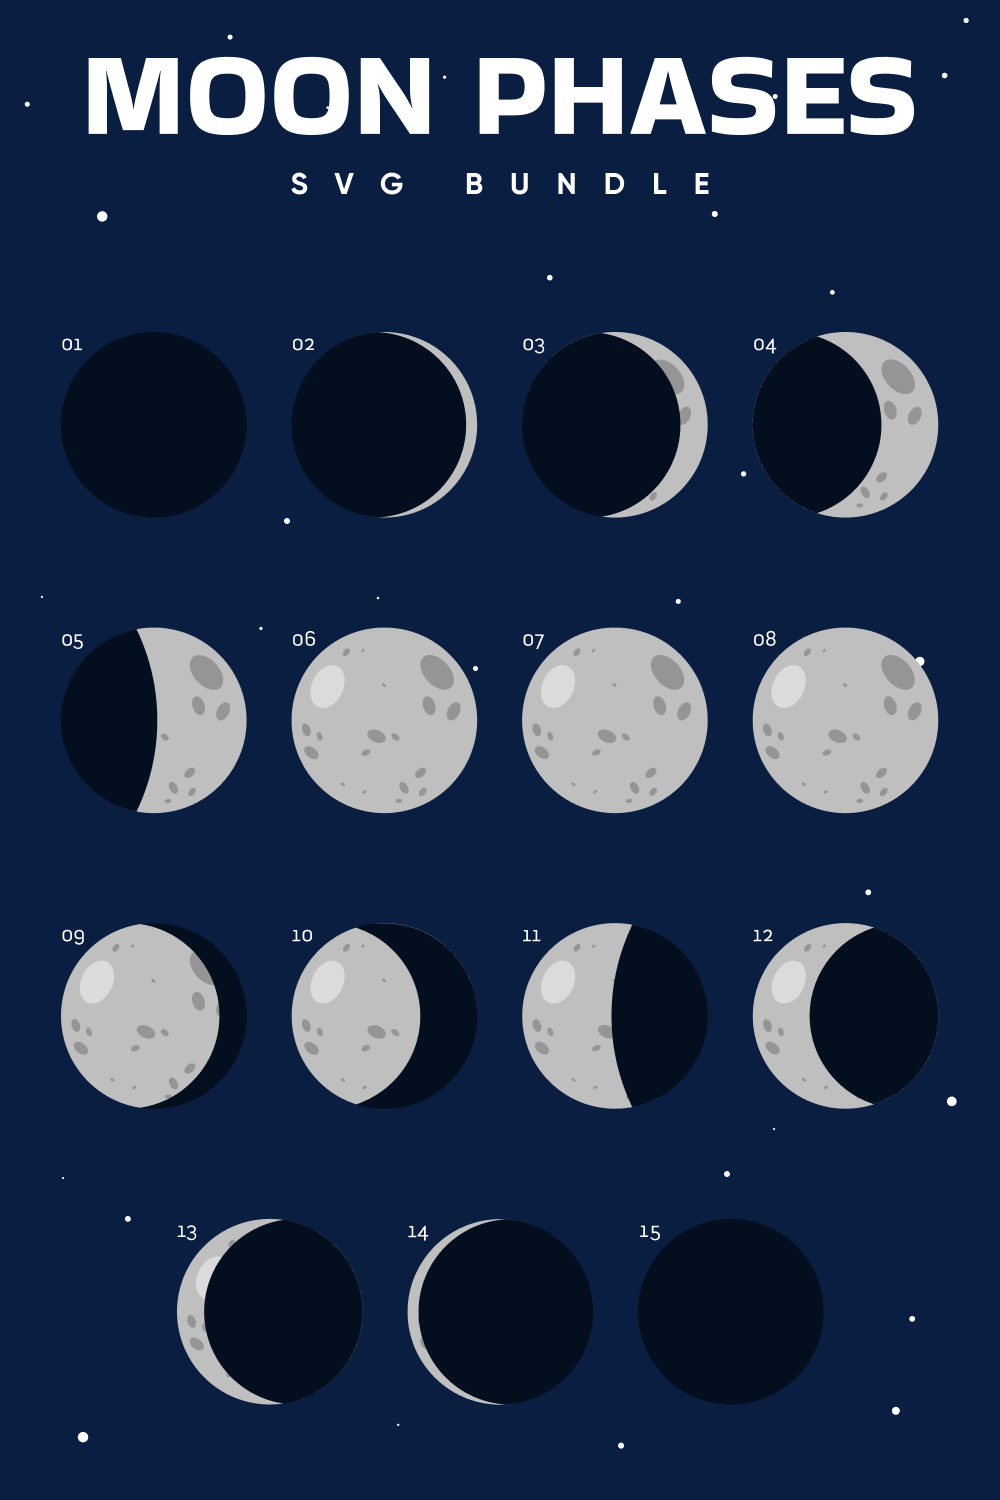 Moon phases SVG bundle.